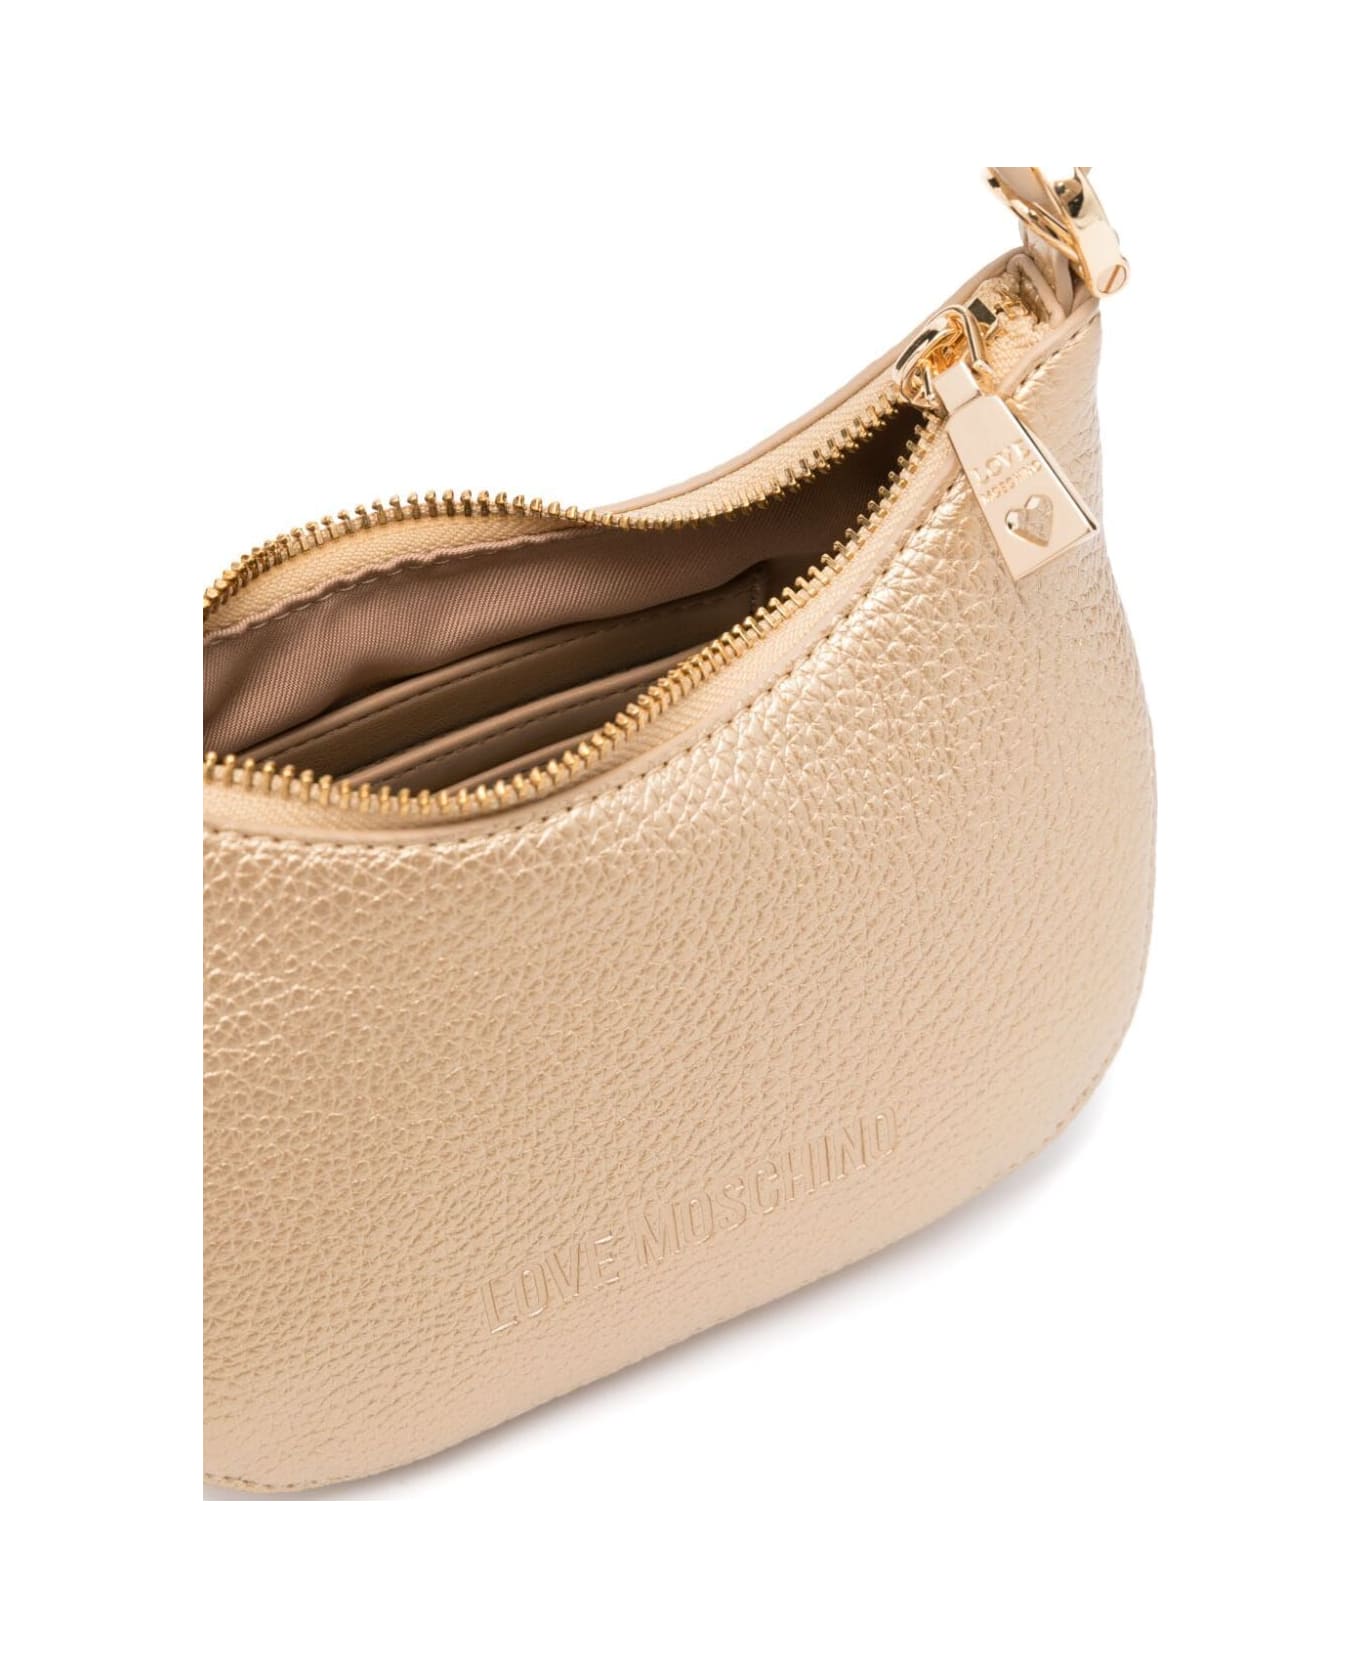 Love Moschino Laminated Shoulder Bag - A Gold トートバッグ